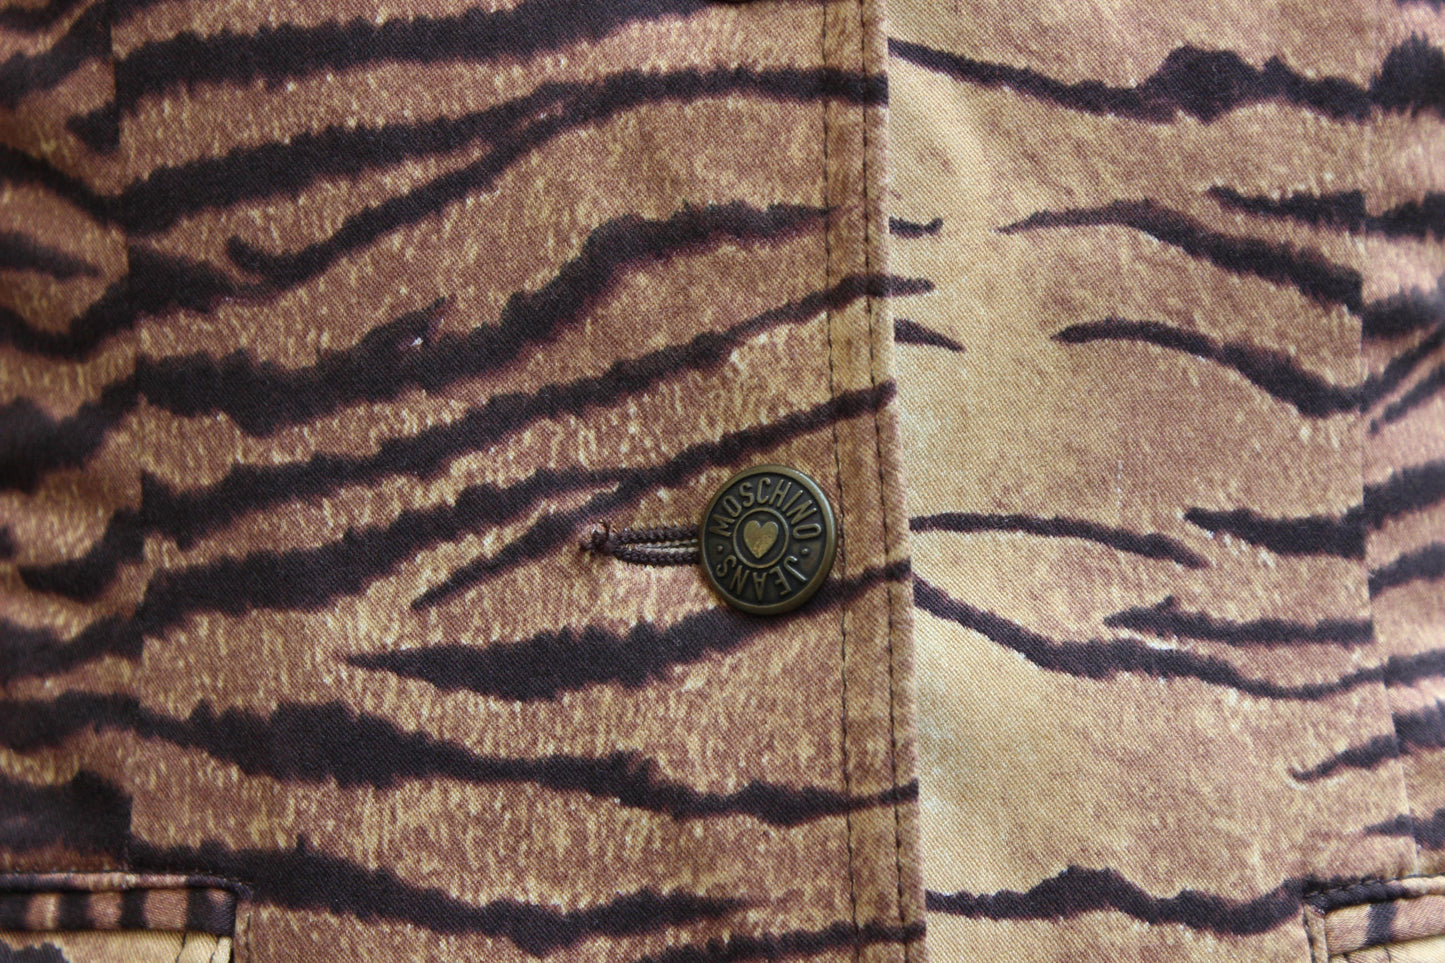 Moschino Jeans Tiger print blazer. Animal Print 90s Blazer